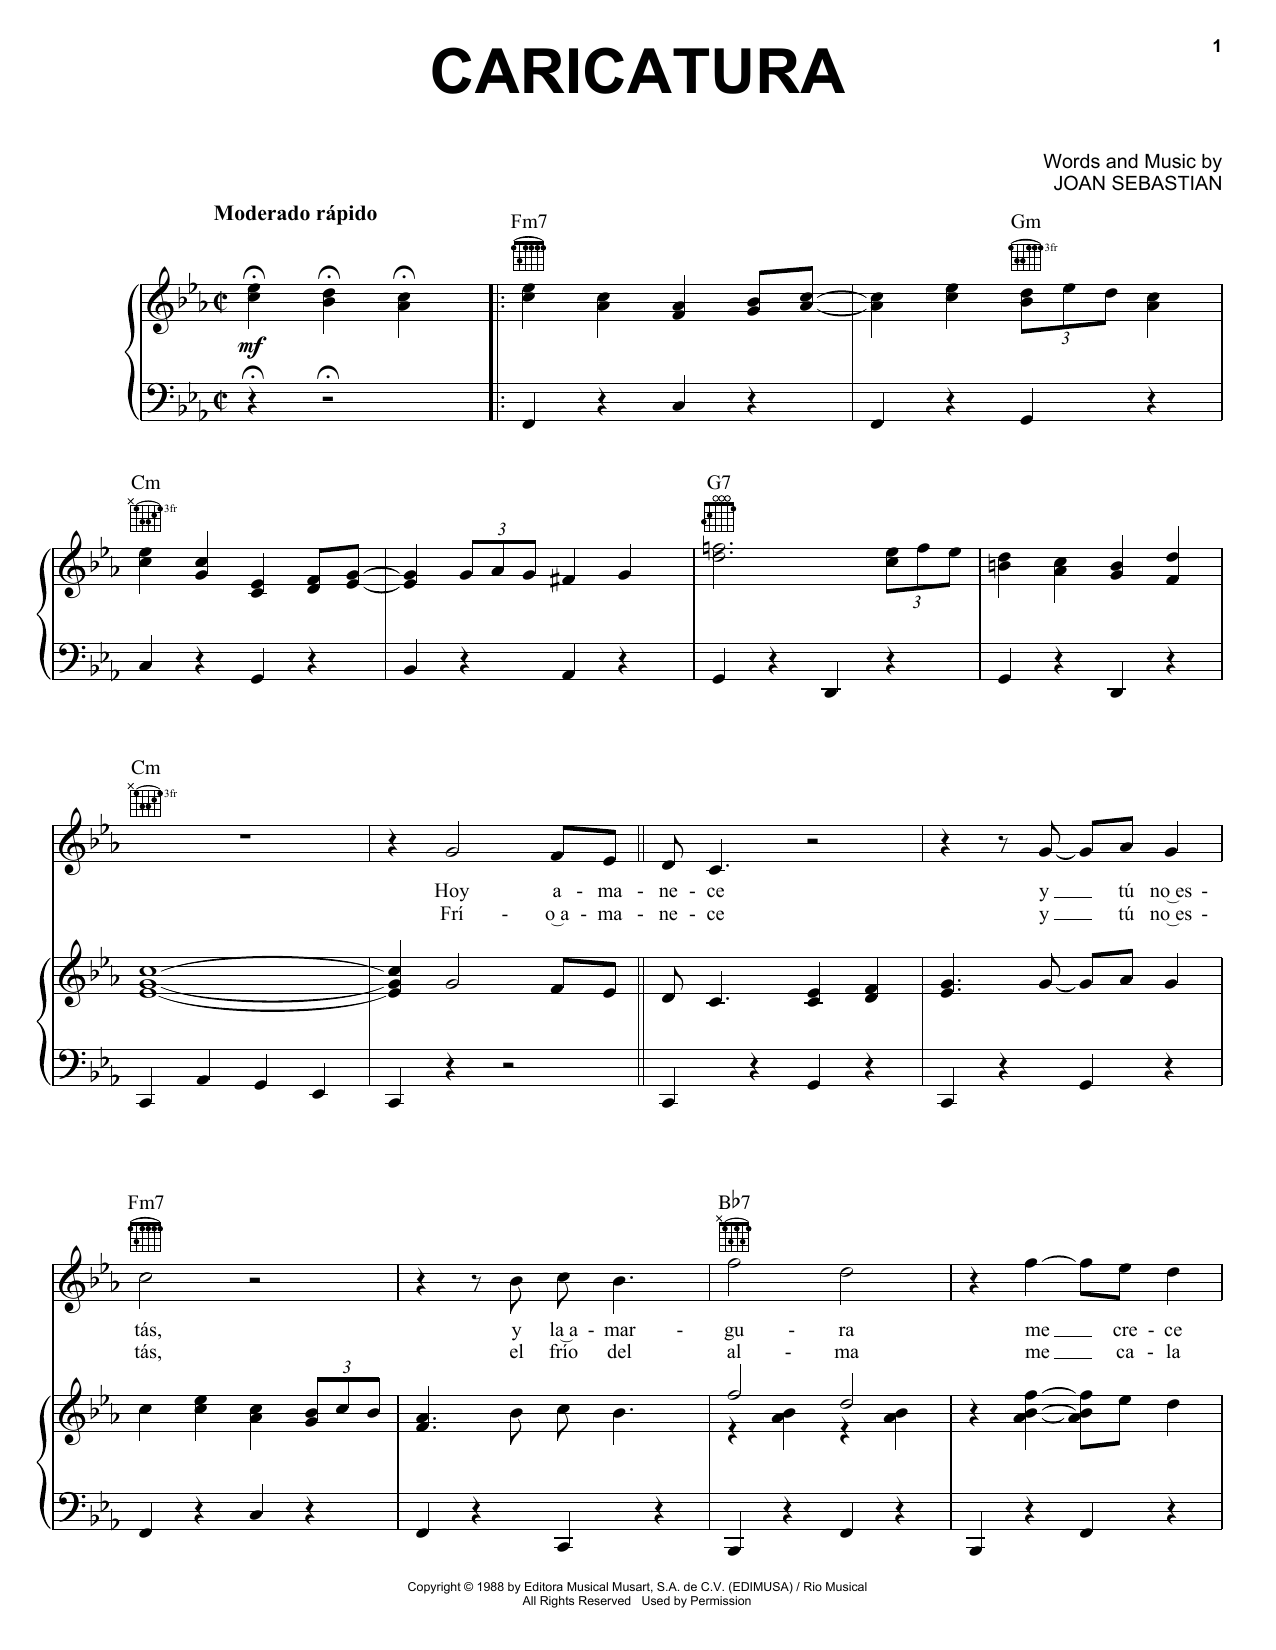 Joan Sebastian Caricatura Sheet Music Notes & Chords for Piano, Vocal & Guitar (Right-Hand Melody) - Download or Print PDF